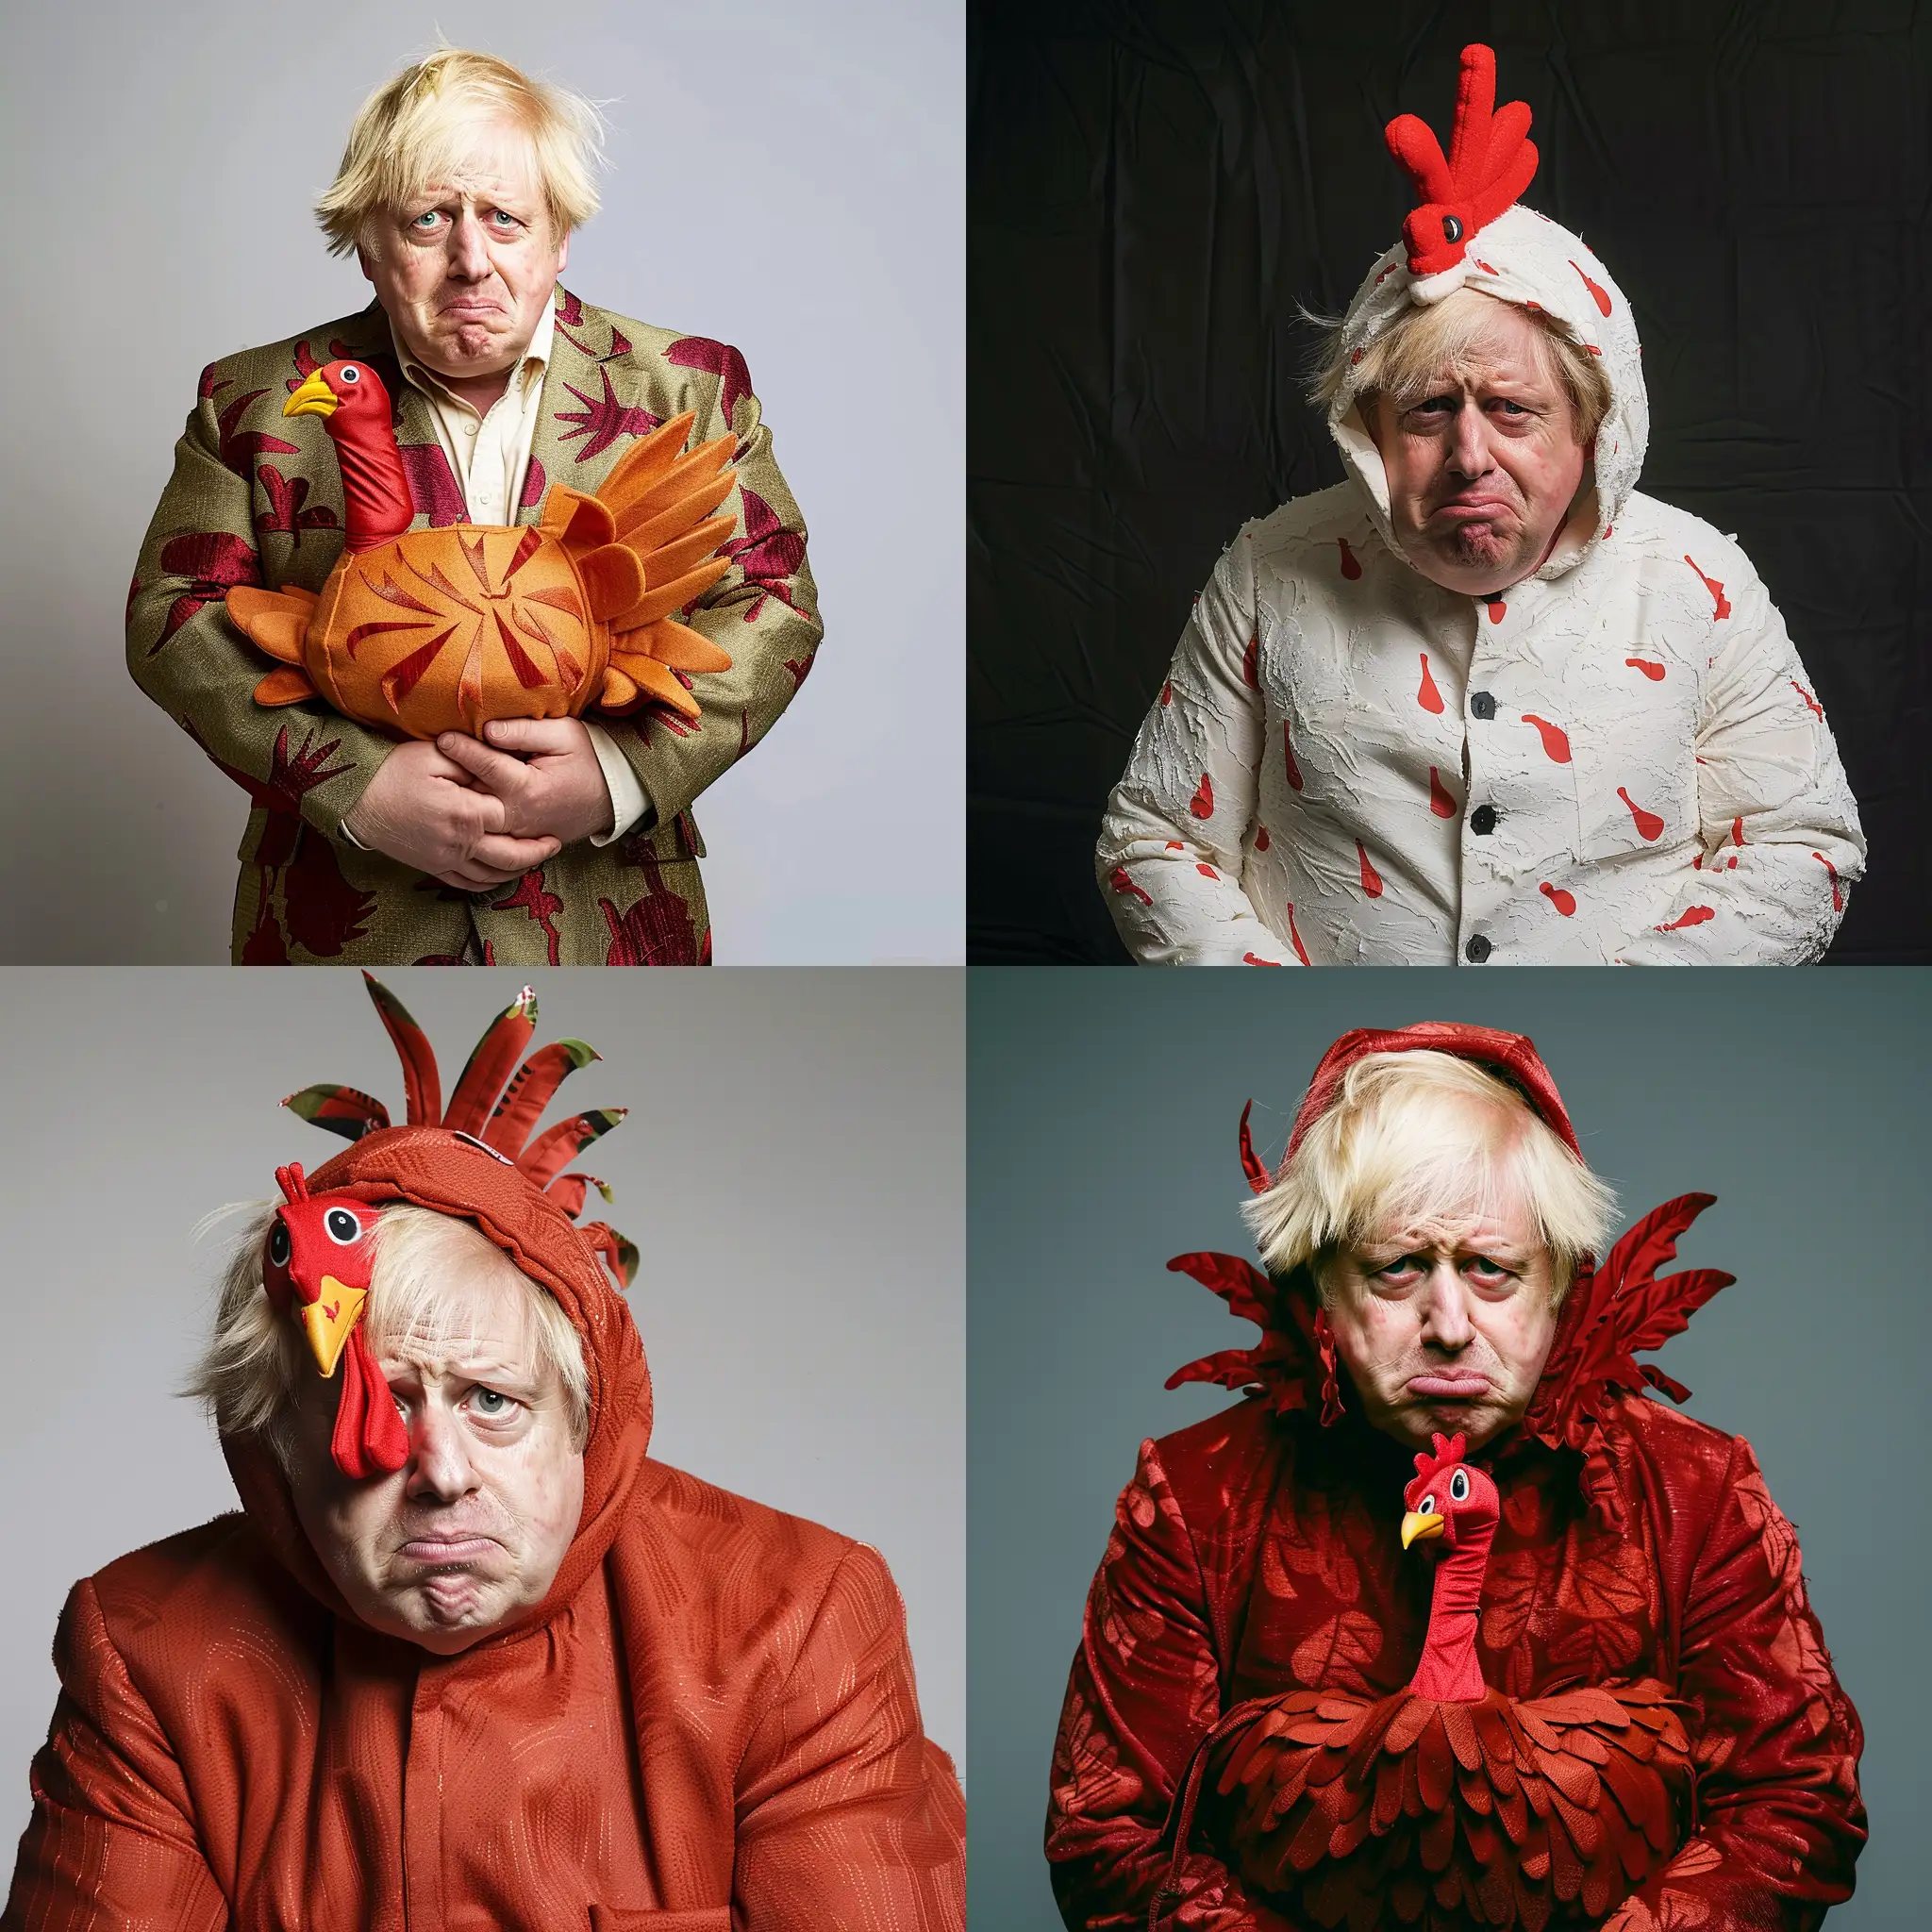 British Politician Boris Johnson dressed in a turkey suit, looking disgruntled